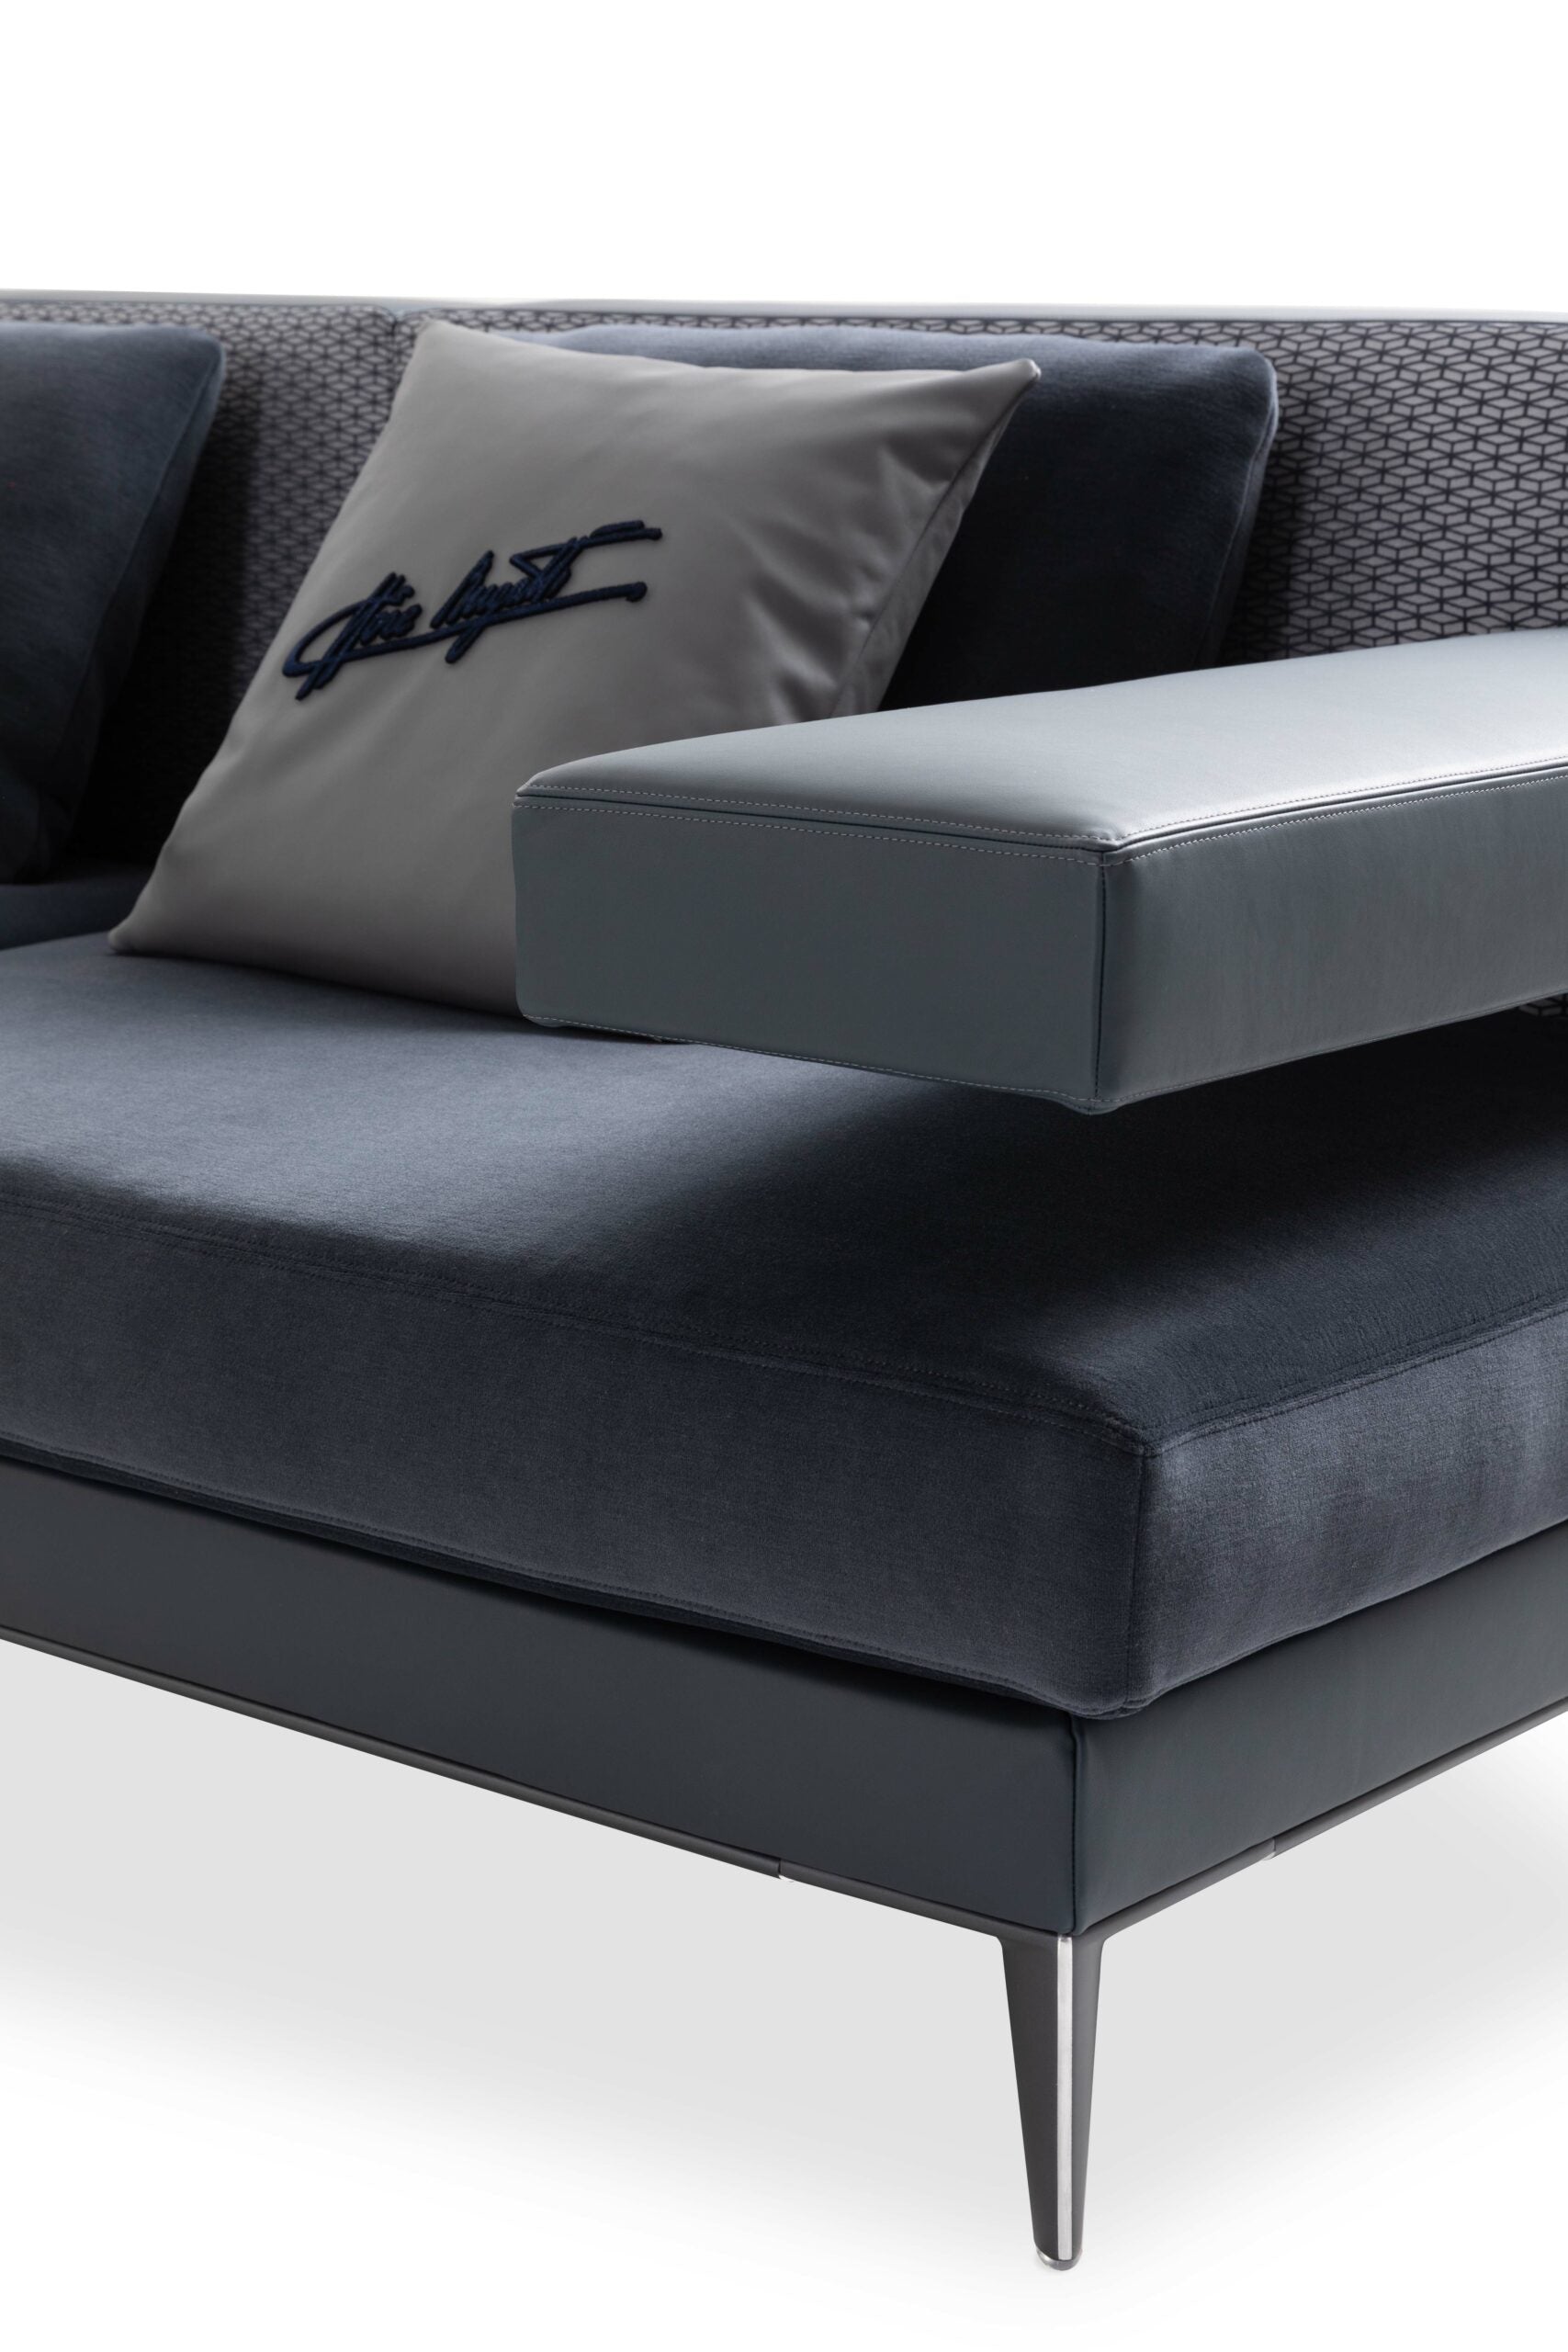 bugatti-home-flow-sofa-black-detail